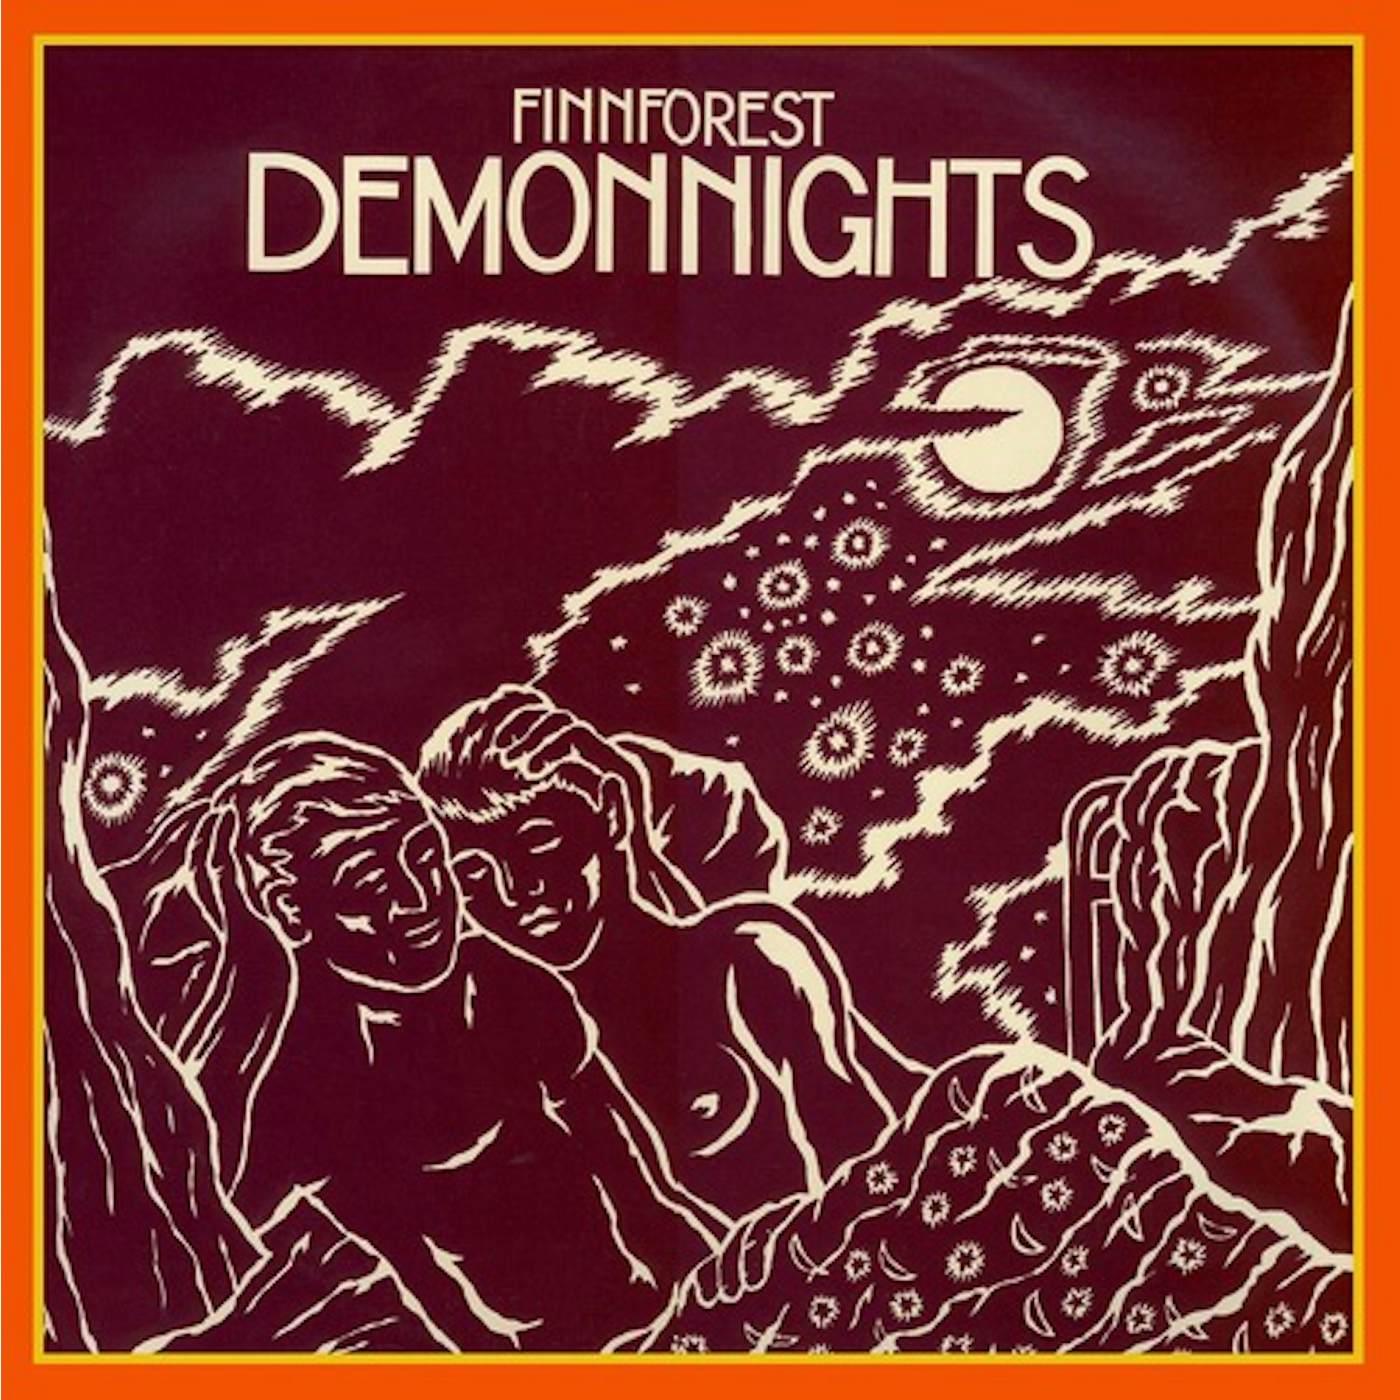 Finnforest Demonnights Vinyl Record